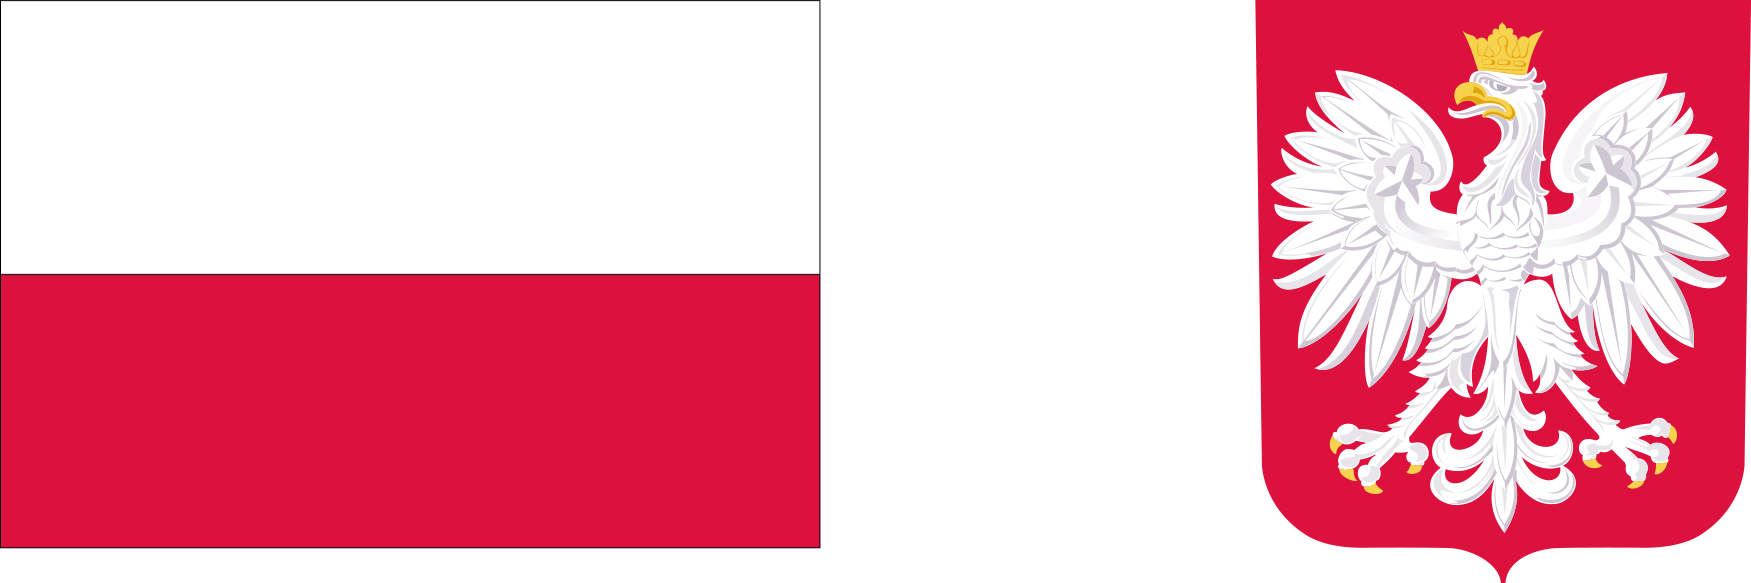 Polish National Flag and Crest